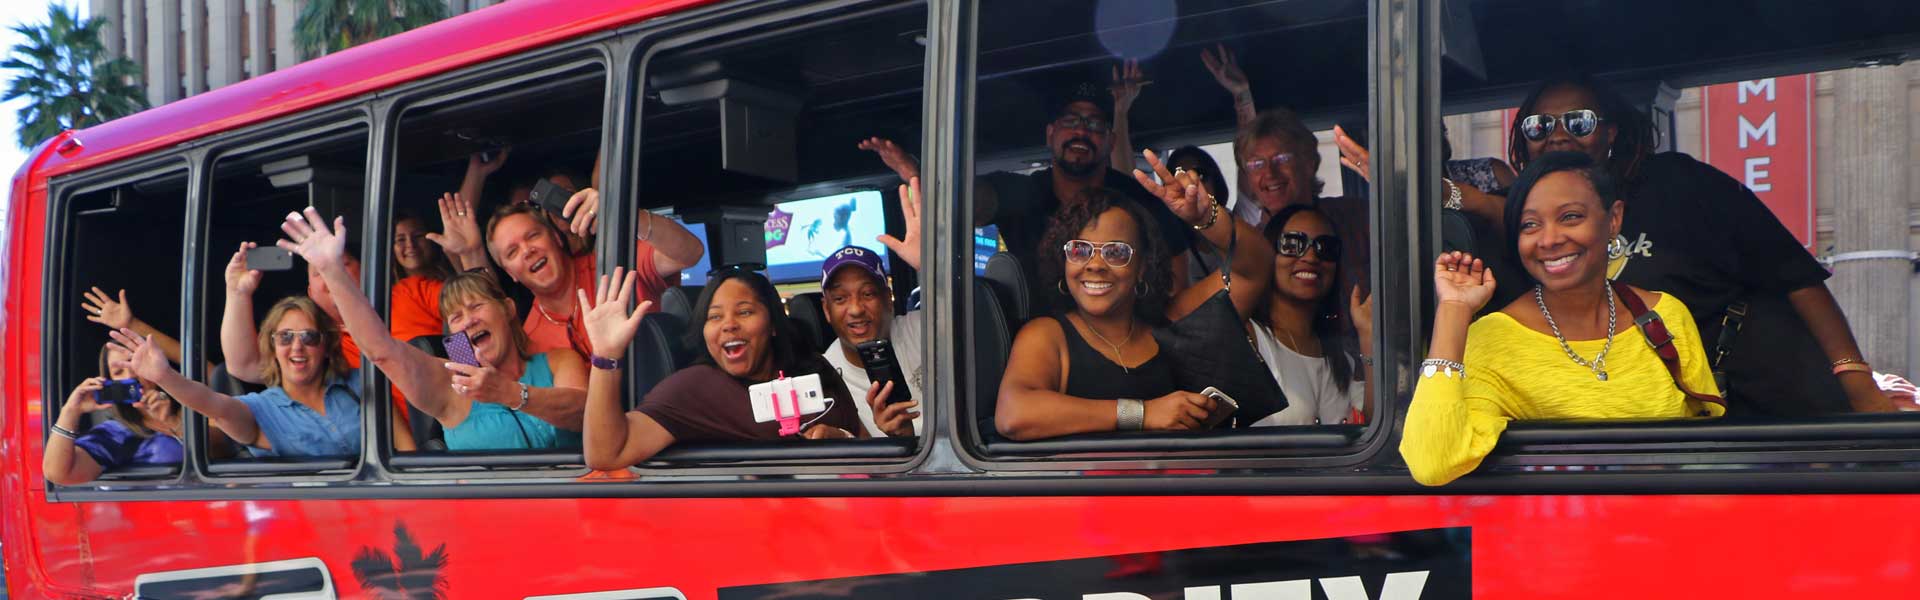 People enjoying a TMZ bus tour in Los Angeles